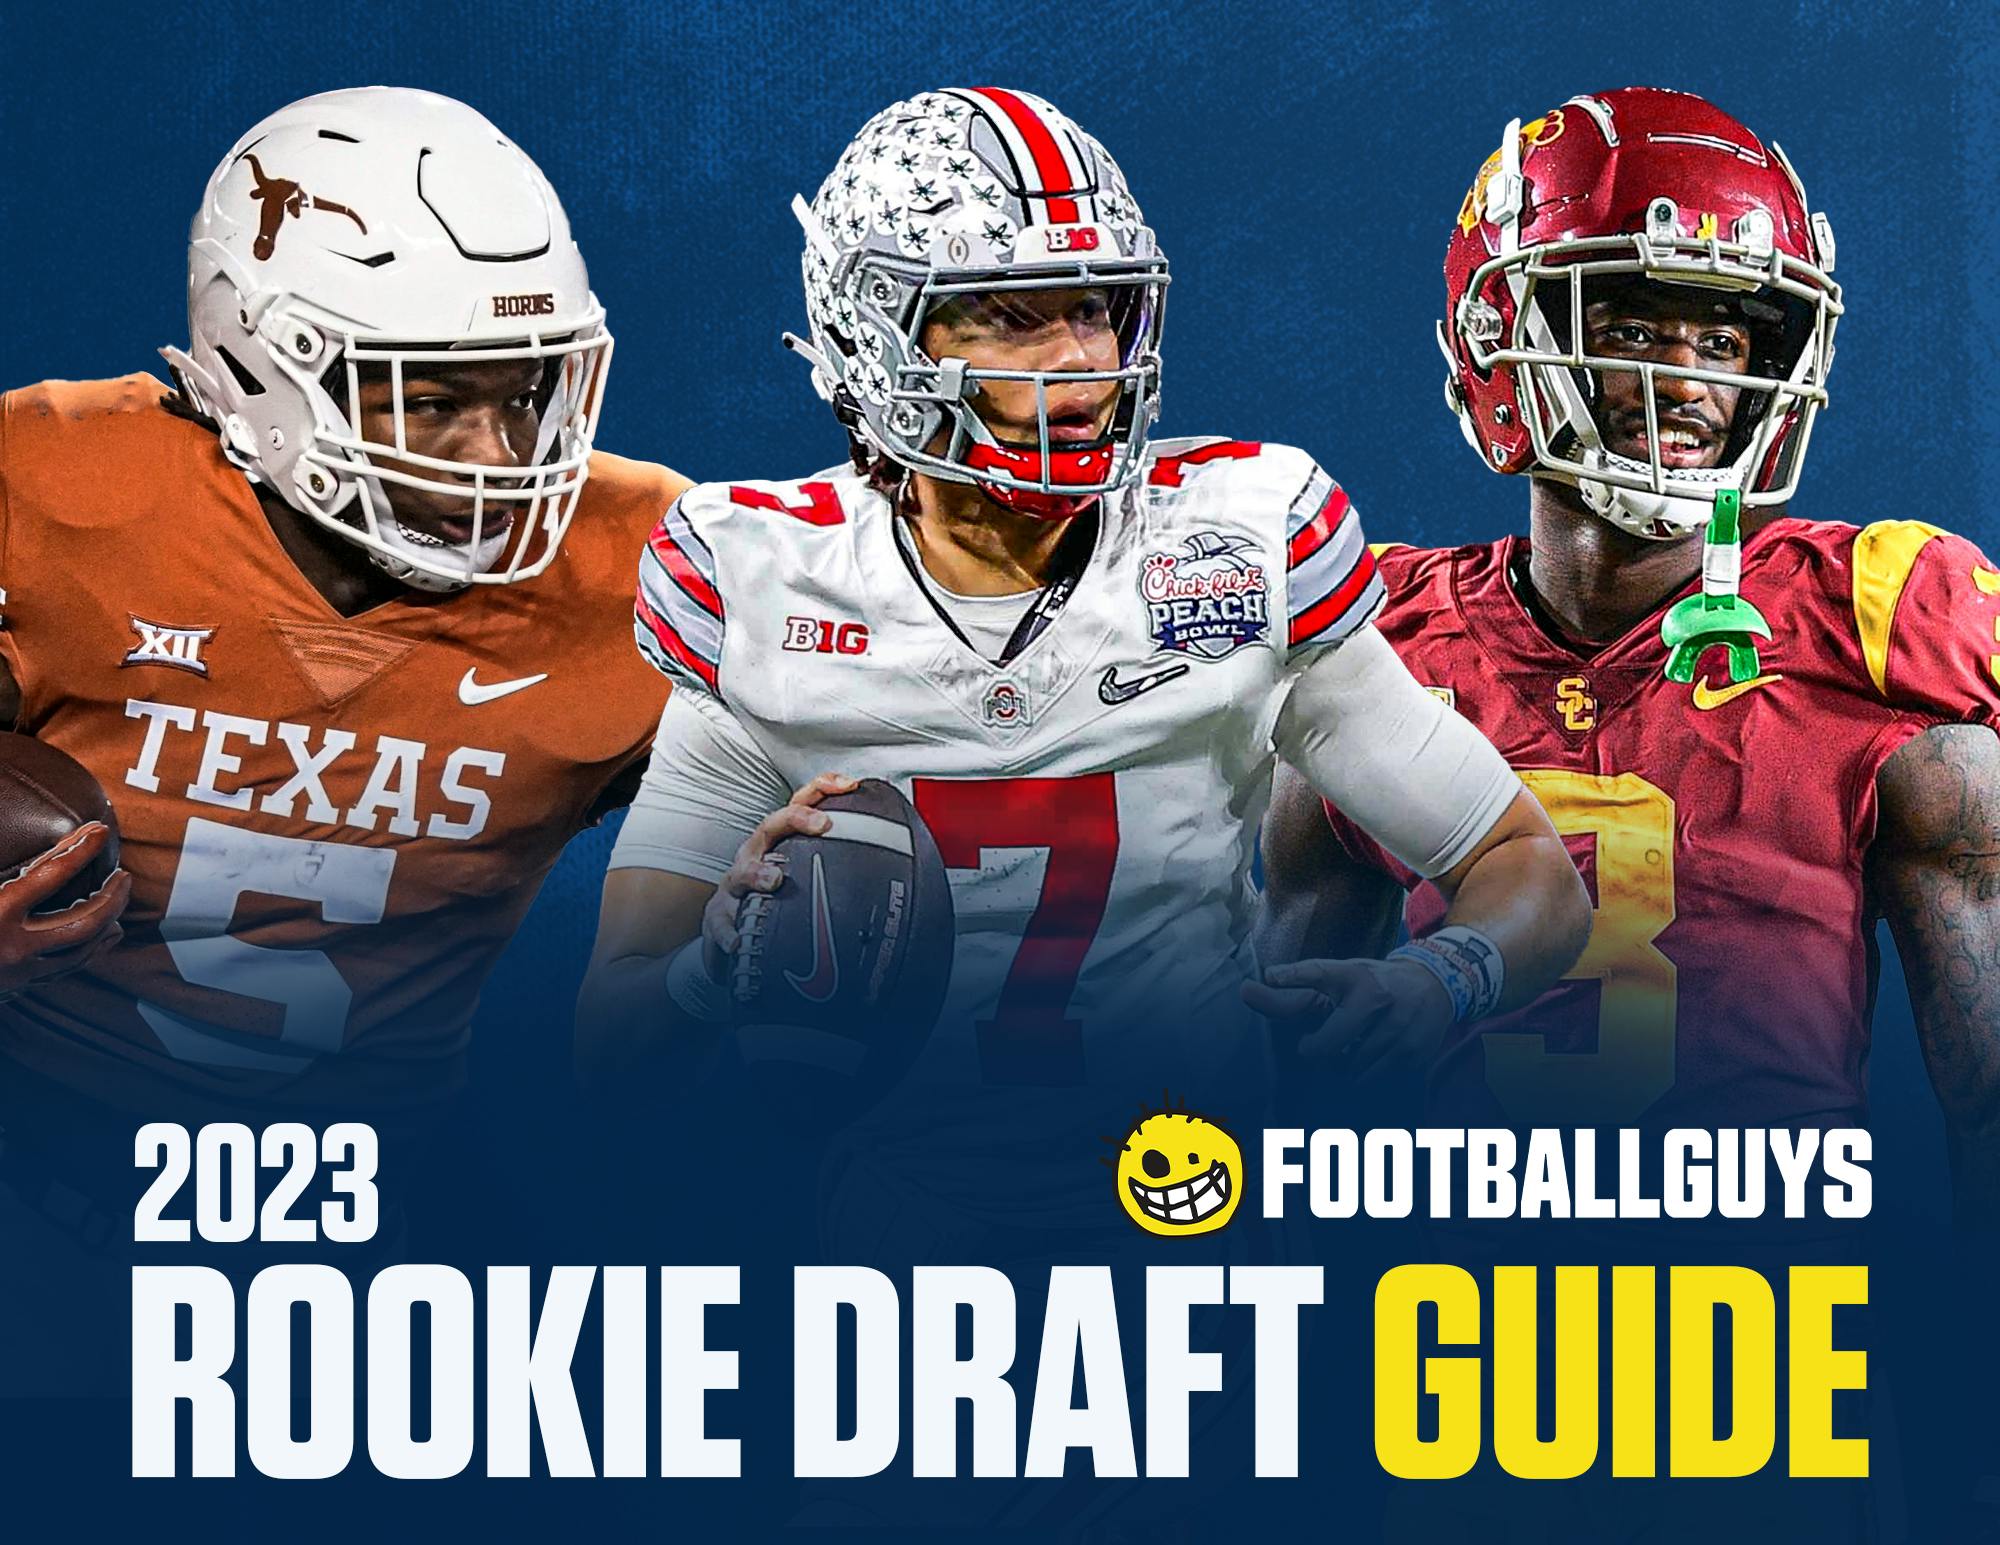 rookie draft 2023